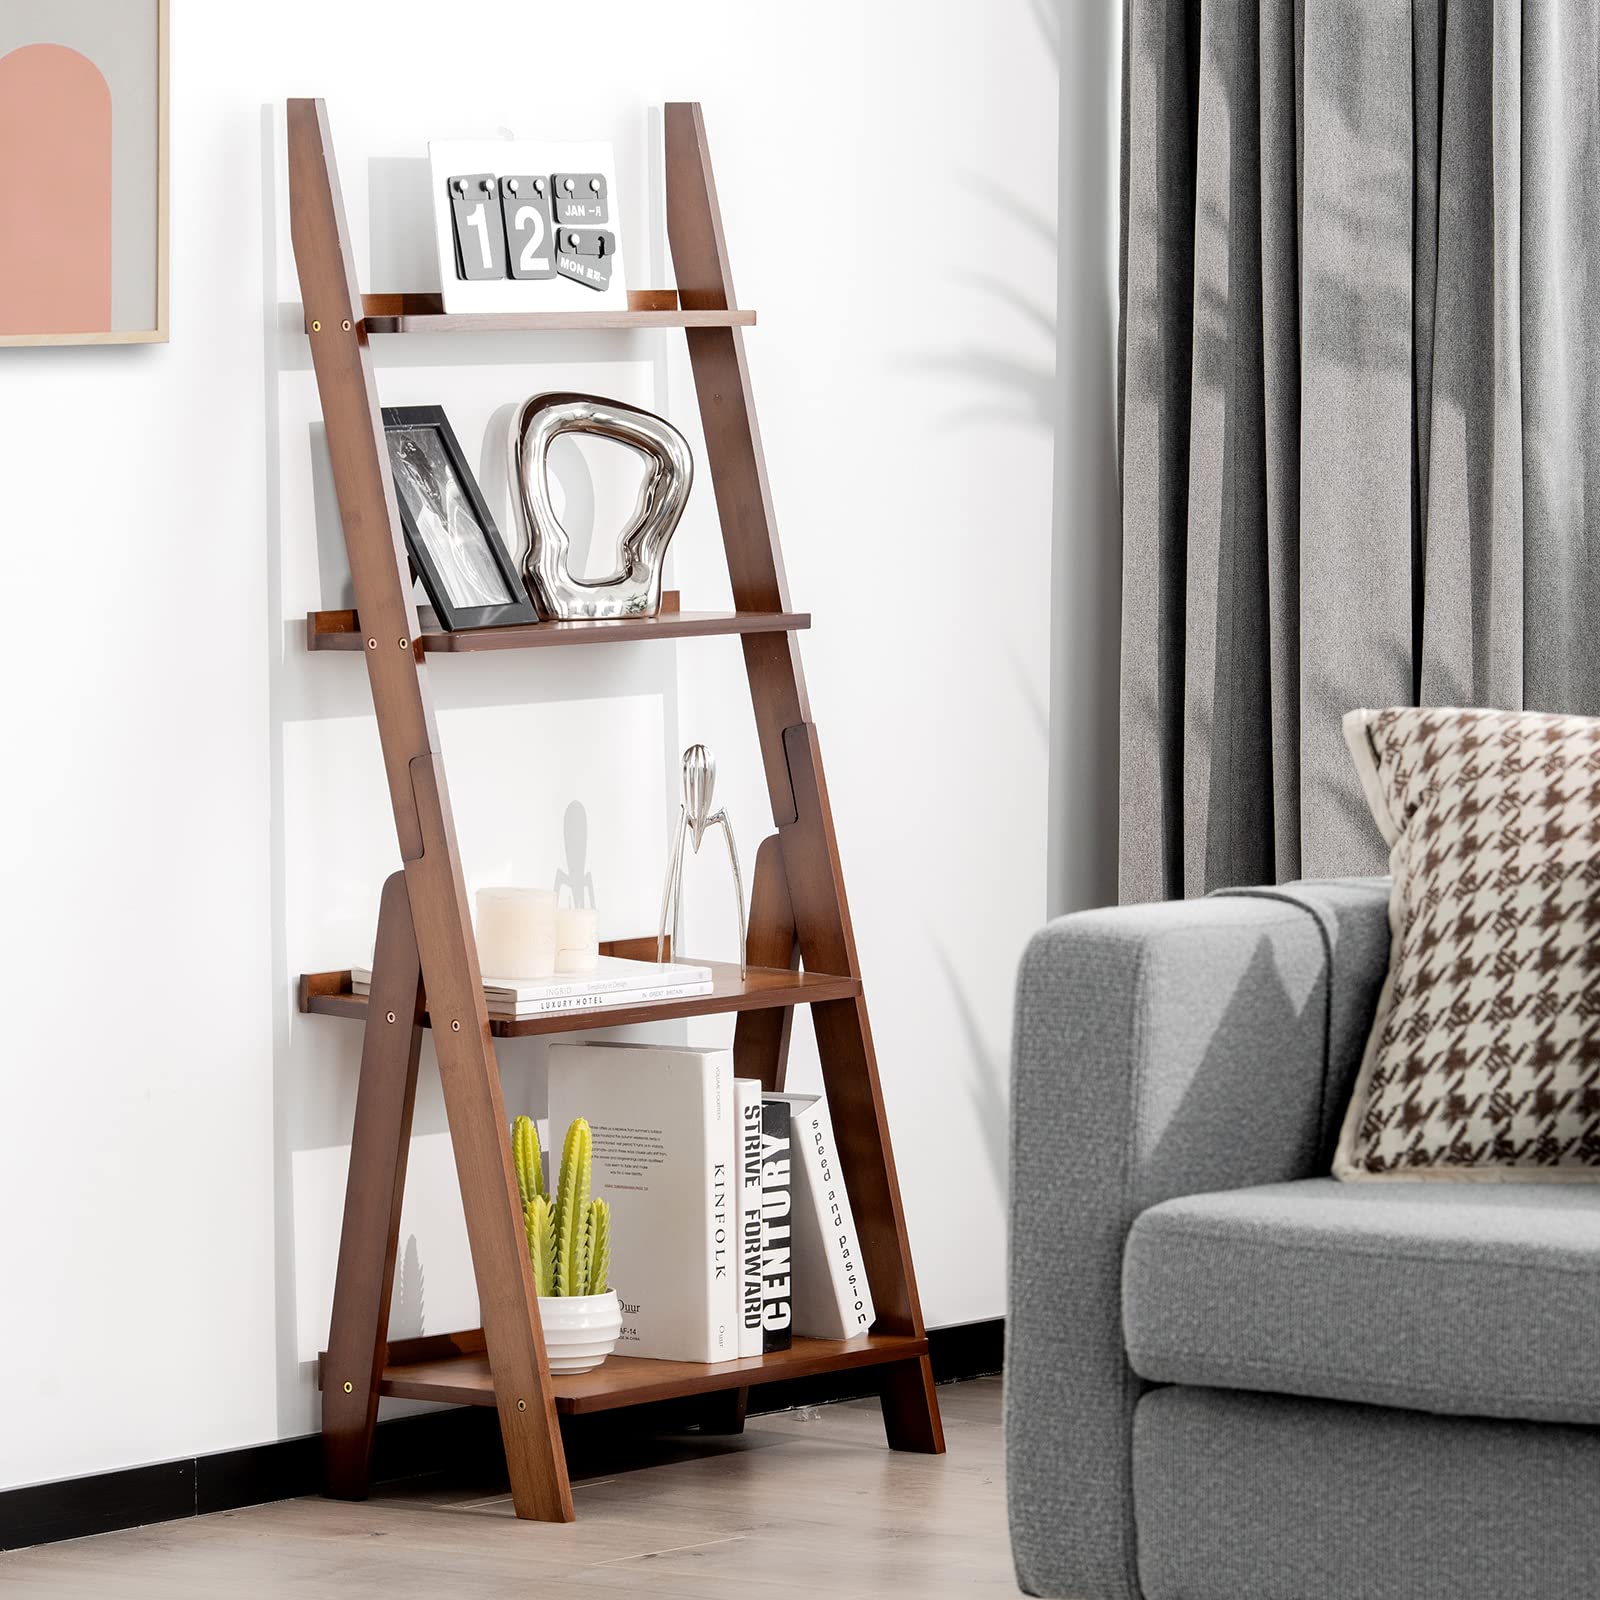 Giantex 4-Tier Bamboo Ladder Shelf, 21" x 12" x 47" Freestanding Display Leaning Storage Shelves